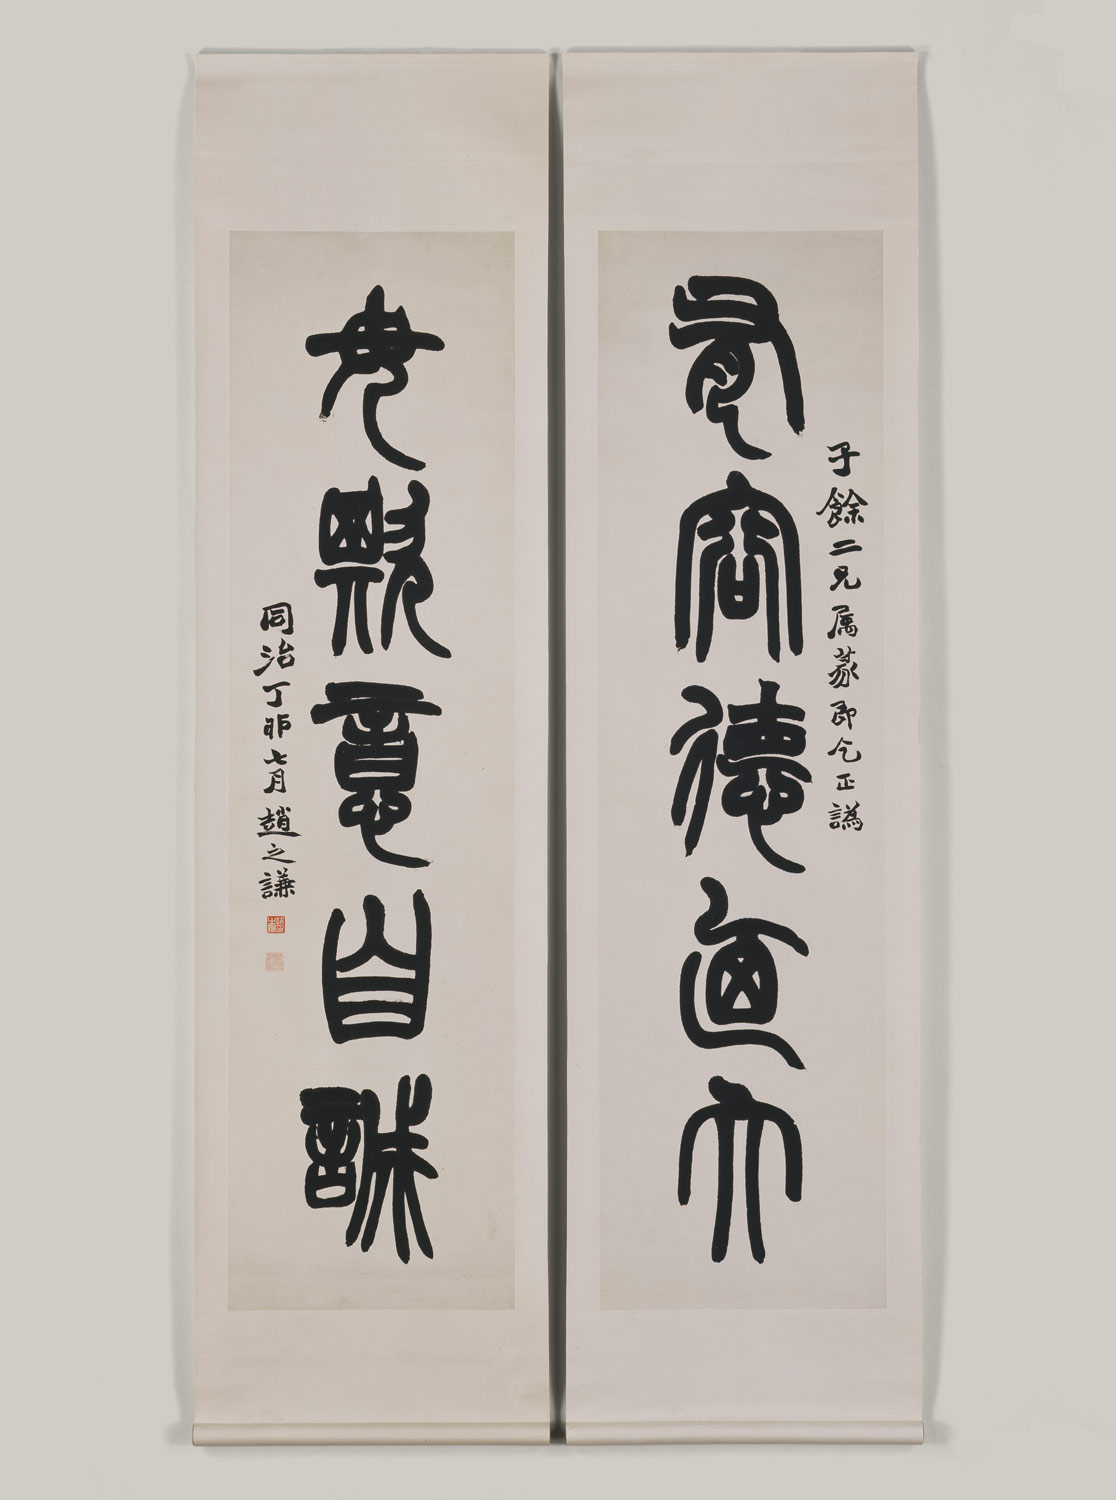 China, 1800–1900 A.D. | Chronology | Heilbrunn Timeline of Art History | The ...1116 x 1500